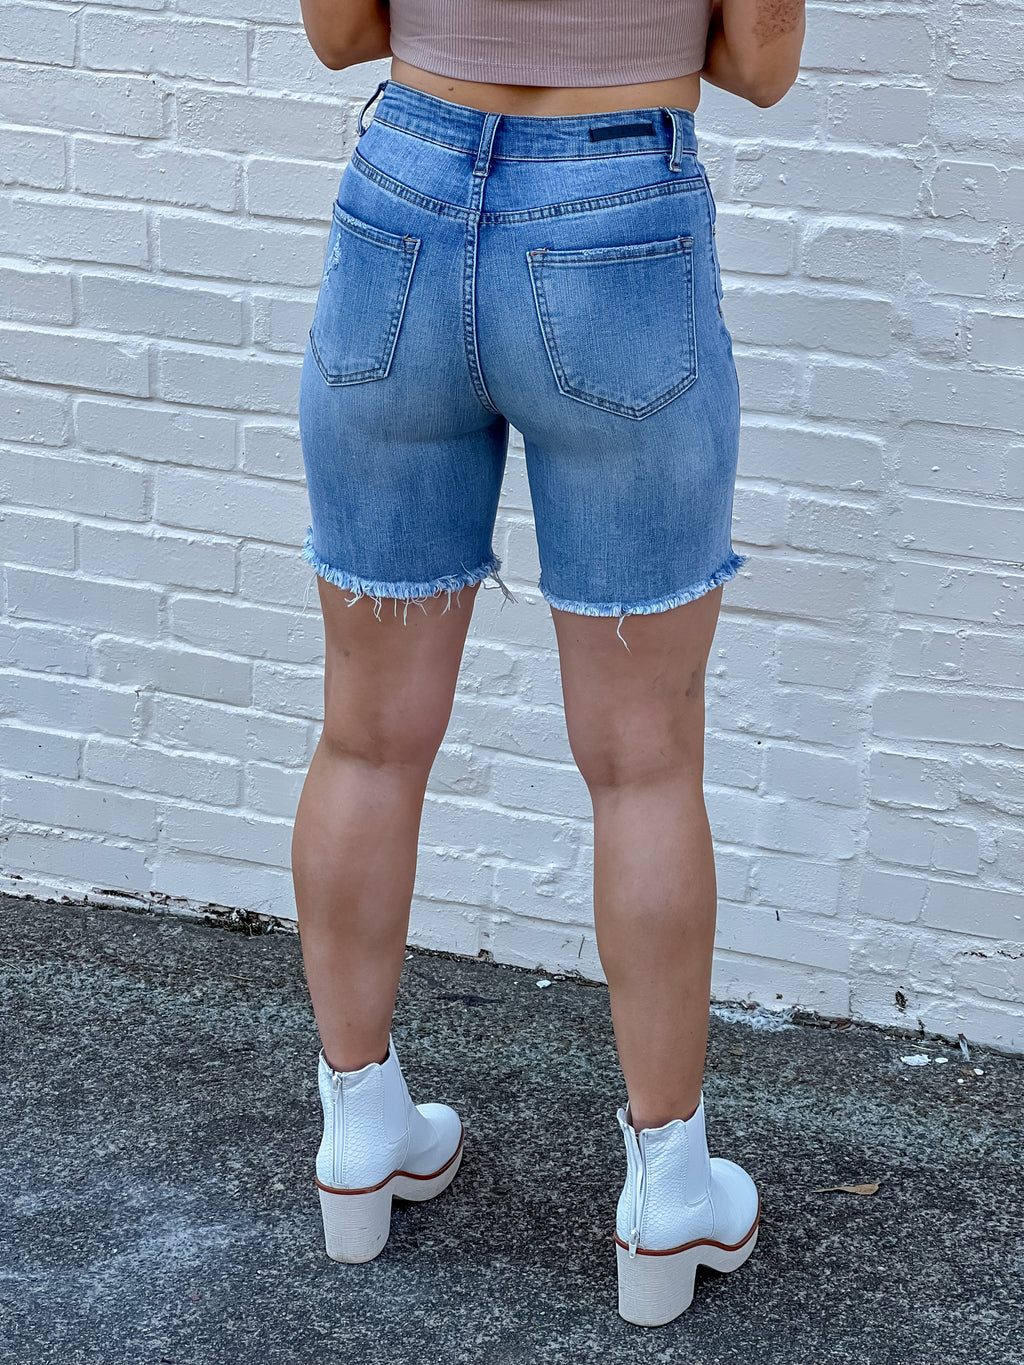 Tried & True Jean Shorts (Light Wash)